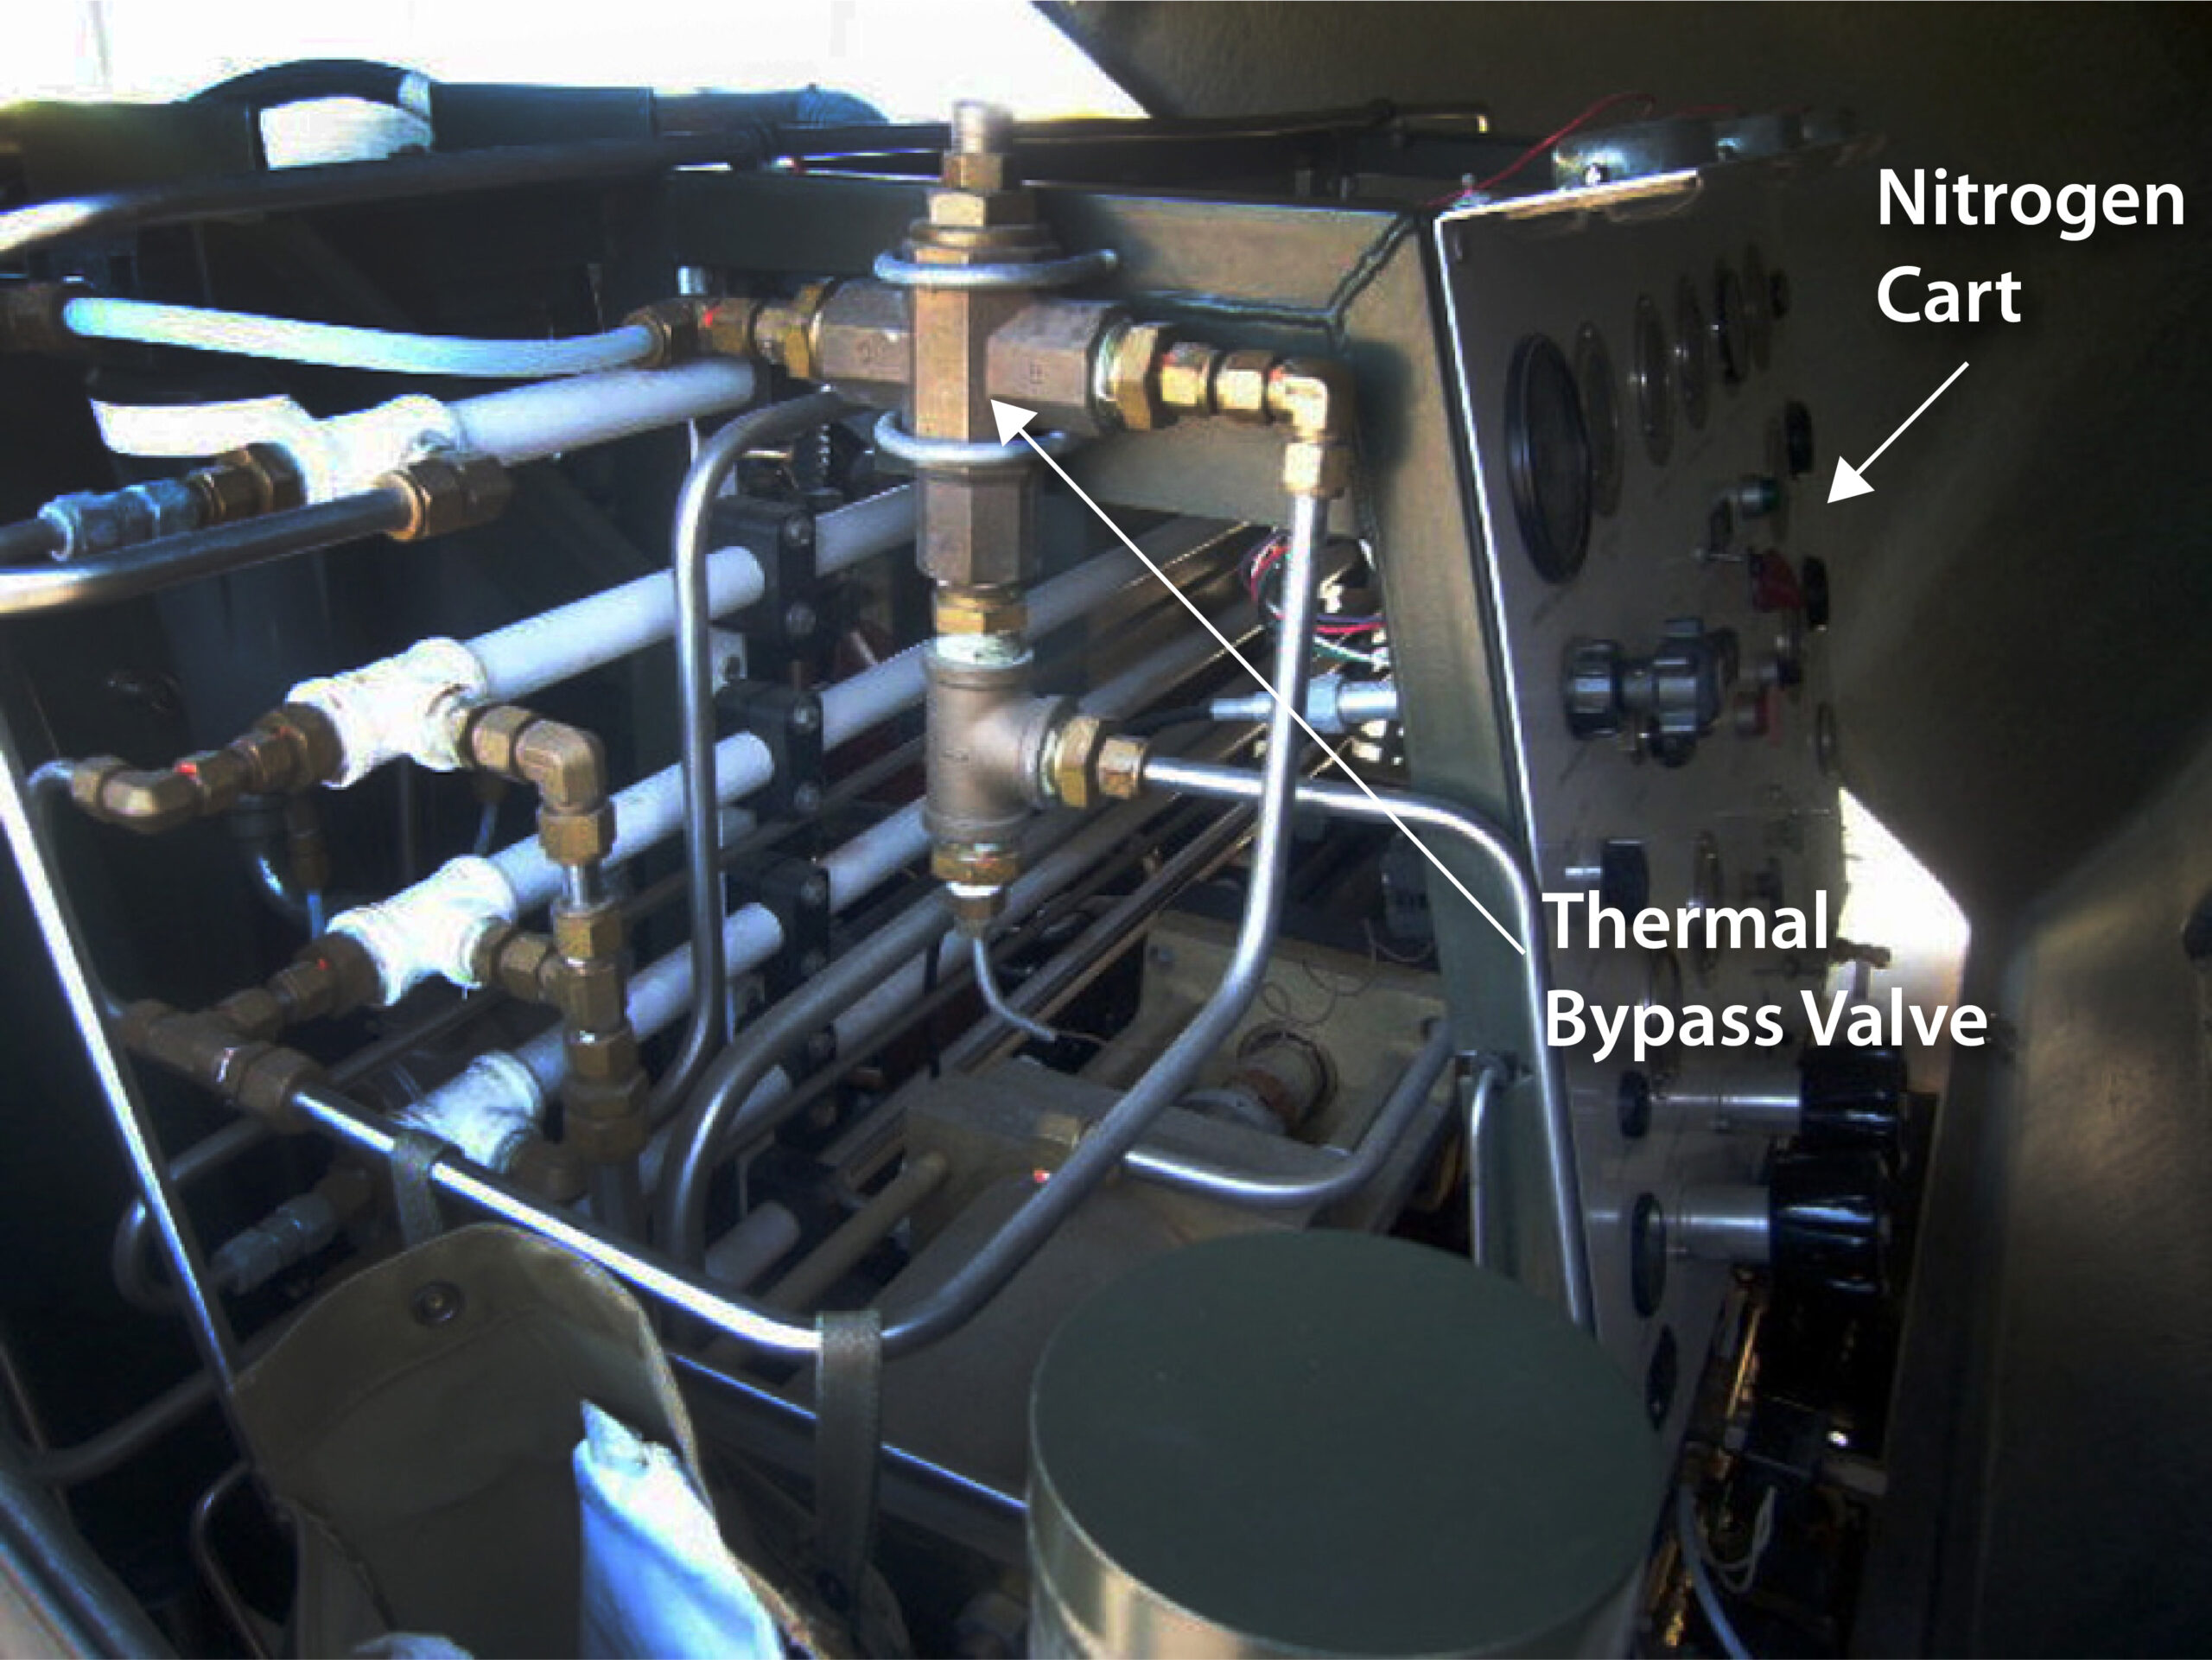 Thermal Bypass Valve on Generic Aircraft Nitrogen Generator